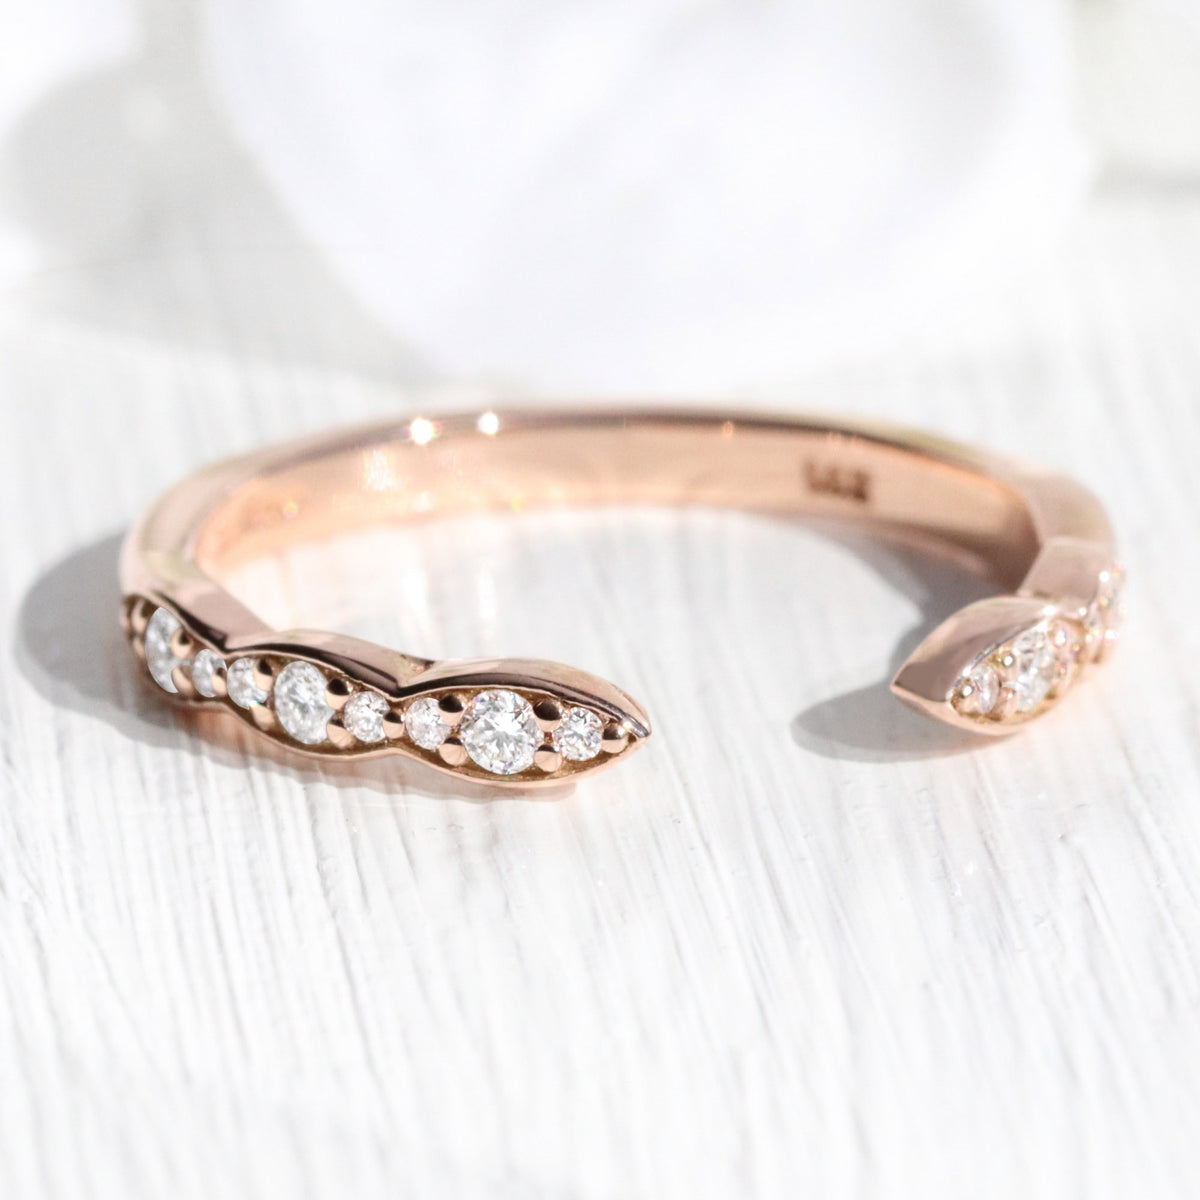 Scalloped diamond wedding ring rose gold open shank band la more design jewelry